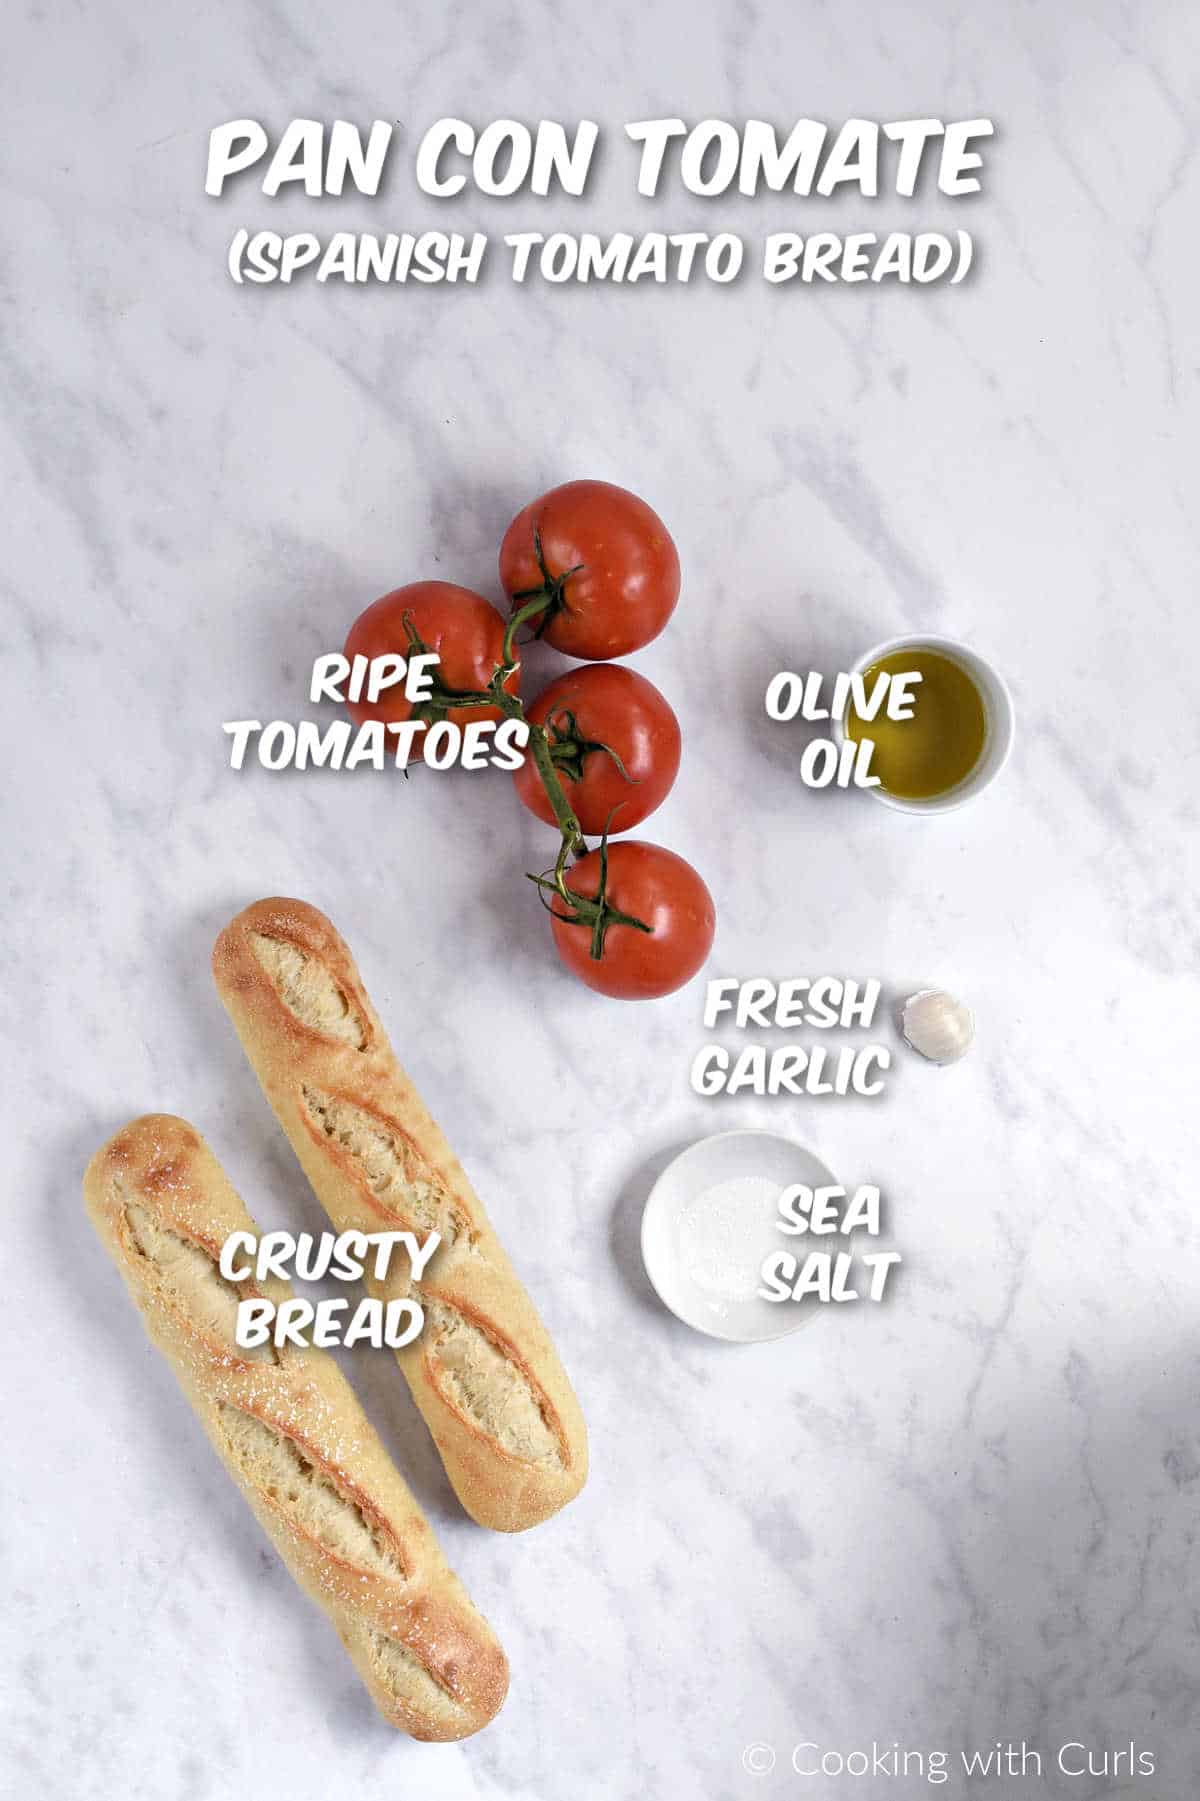 Pan con Tomate - Spanish tomato bread ingredients.